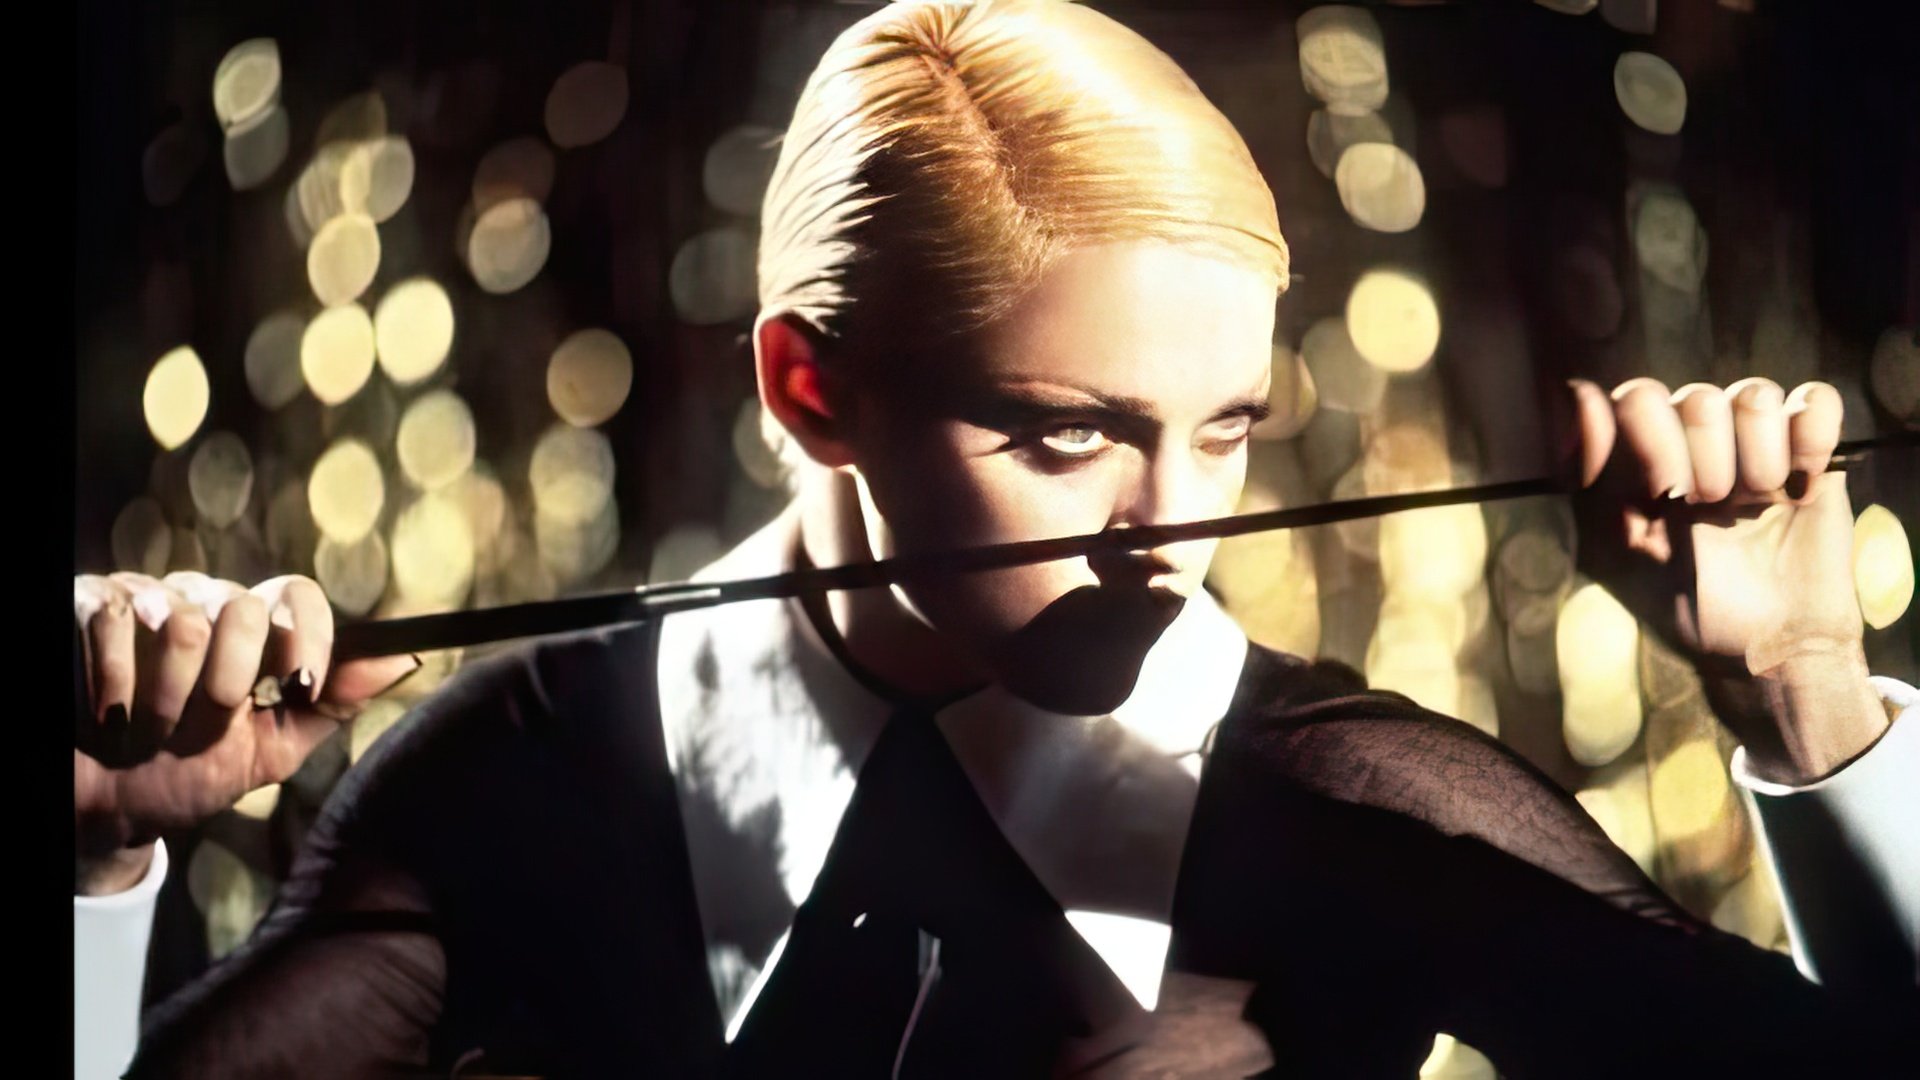 Scene from the “Erotica” music video